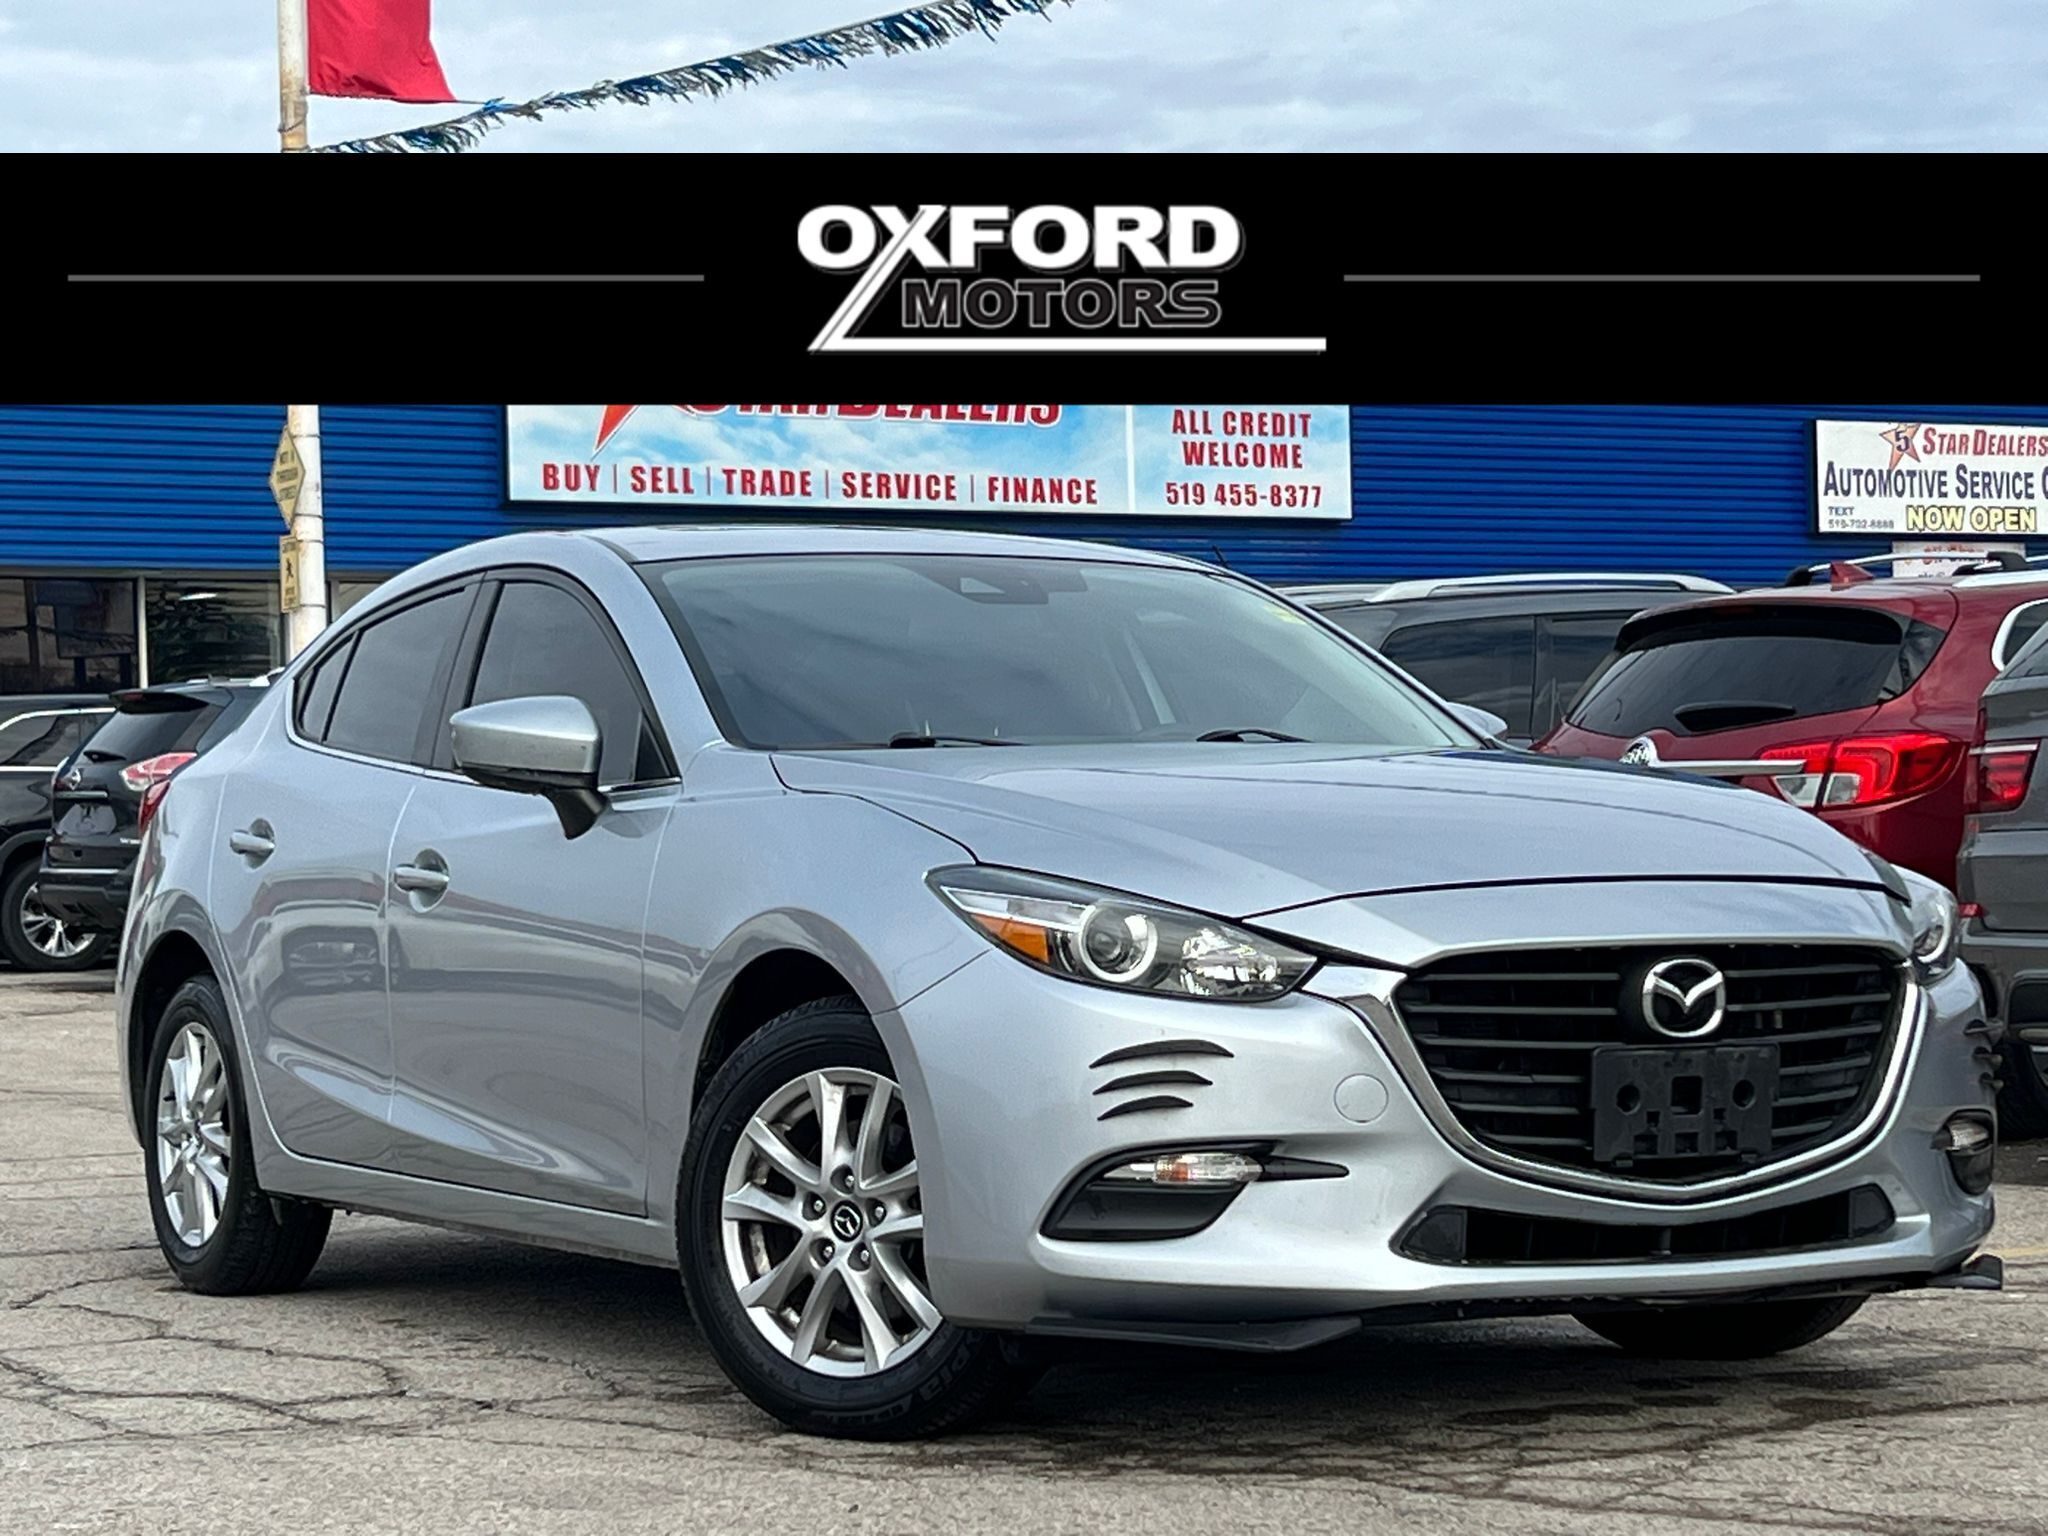 2018 Mazda Mazda3 GS Manual we finance all credit over 700 vehicles